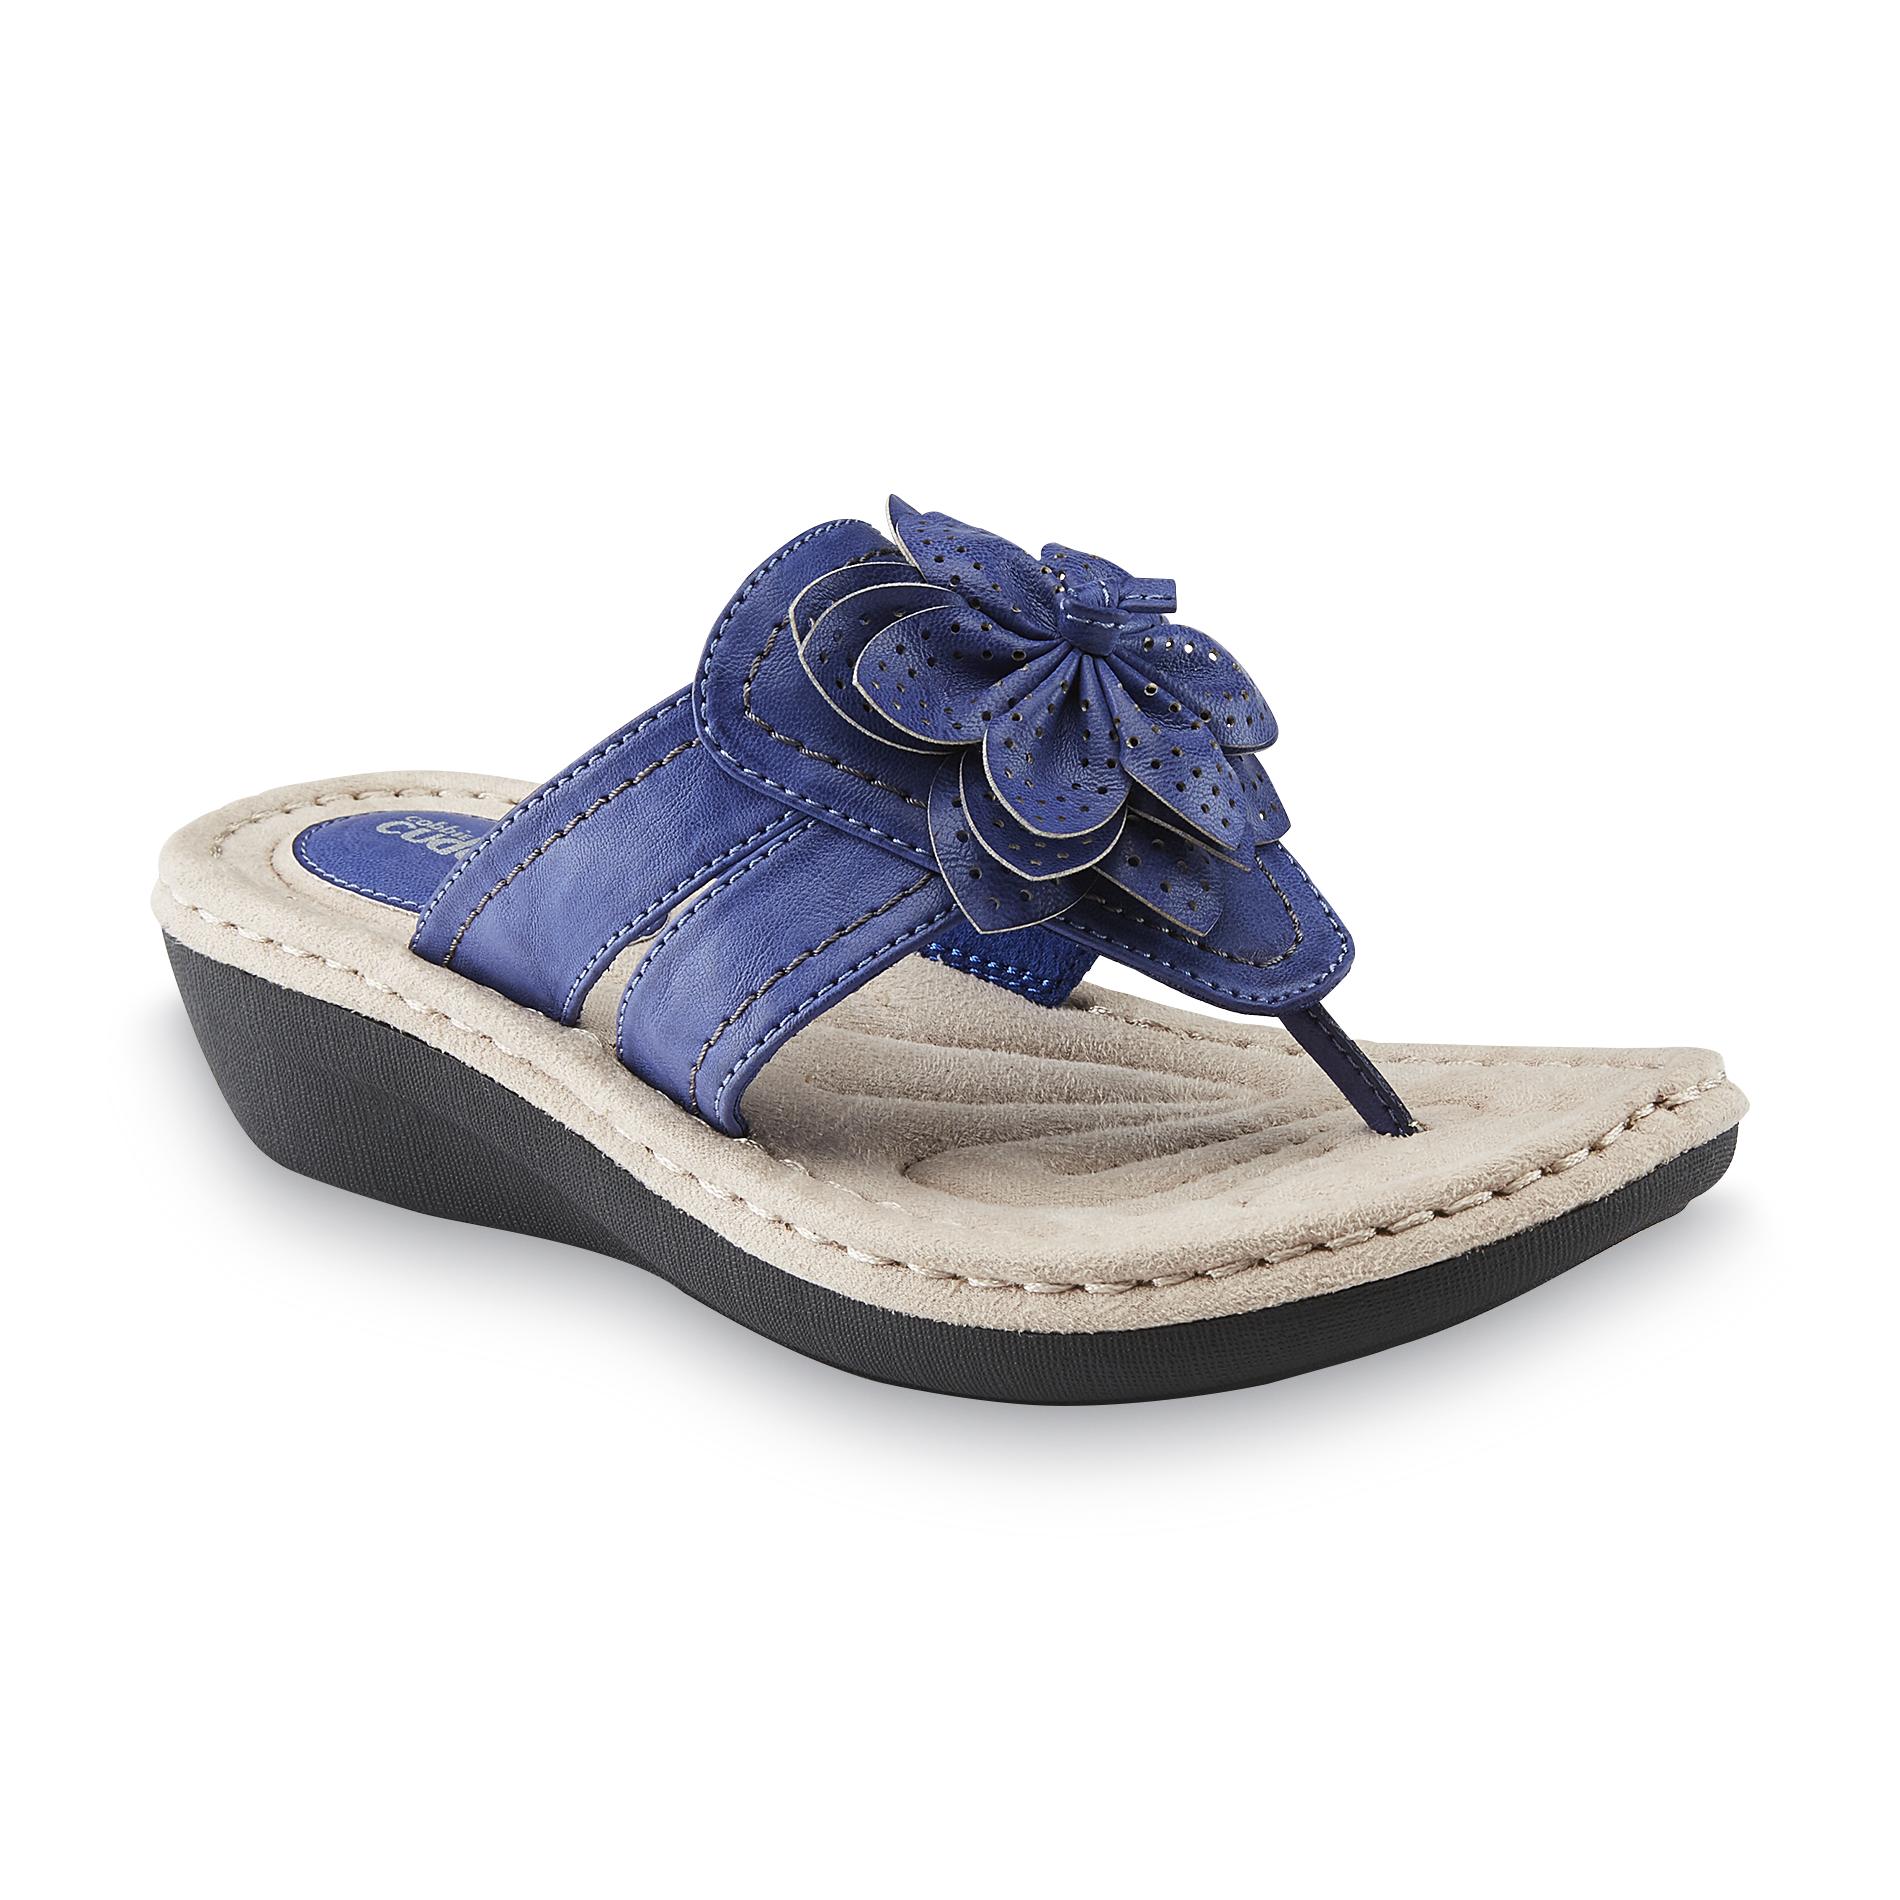 Cobbie Cuddlers Womens Sandals | Kmart.com